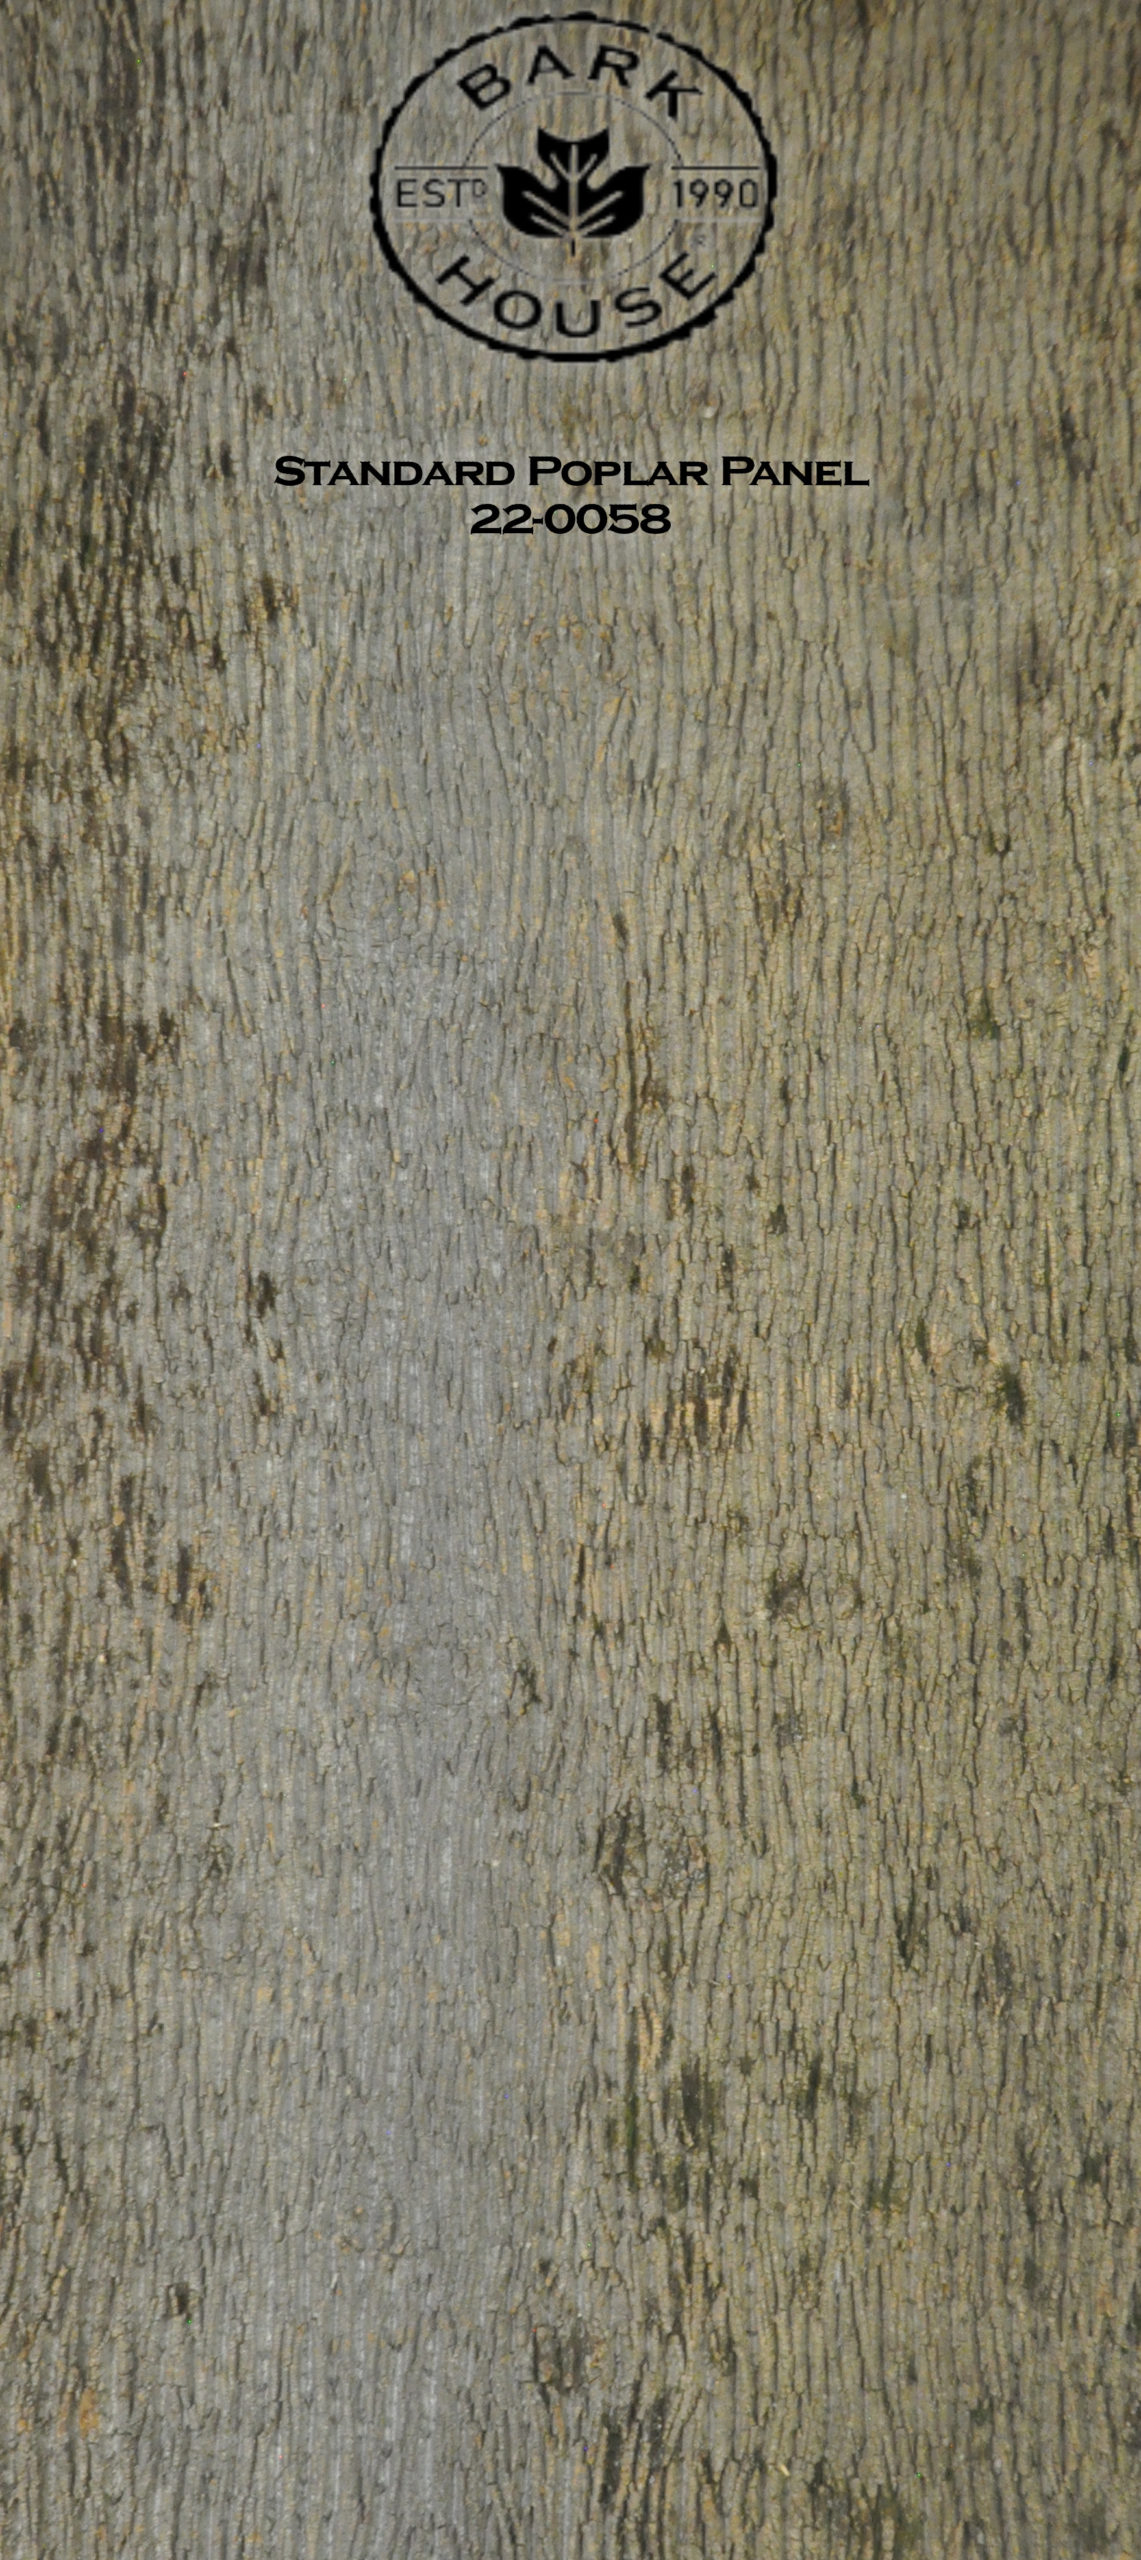 Bark House poplar bark panel SKU POPP-STD-22-0058